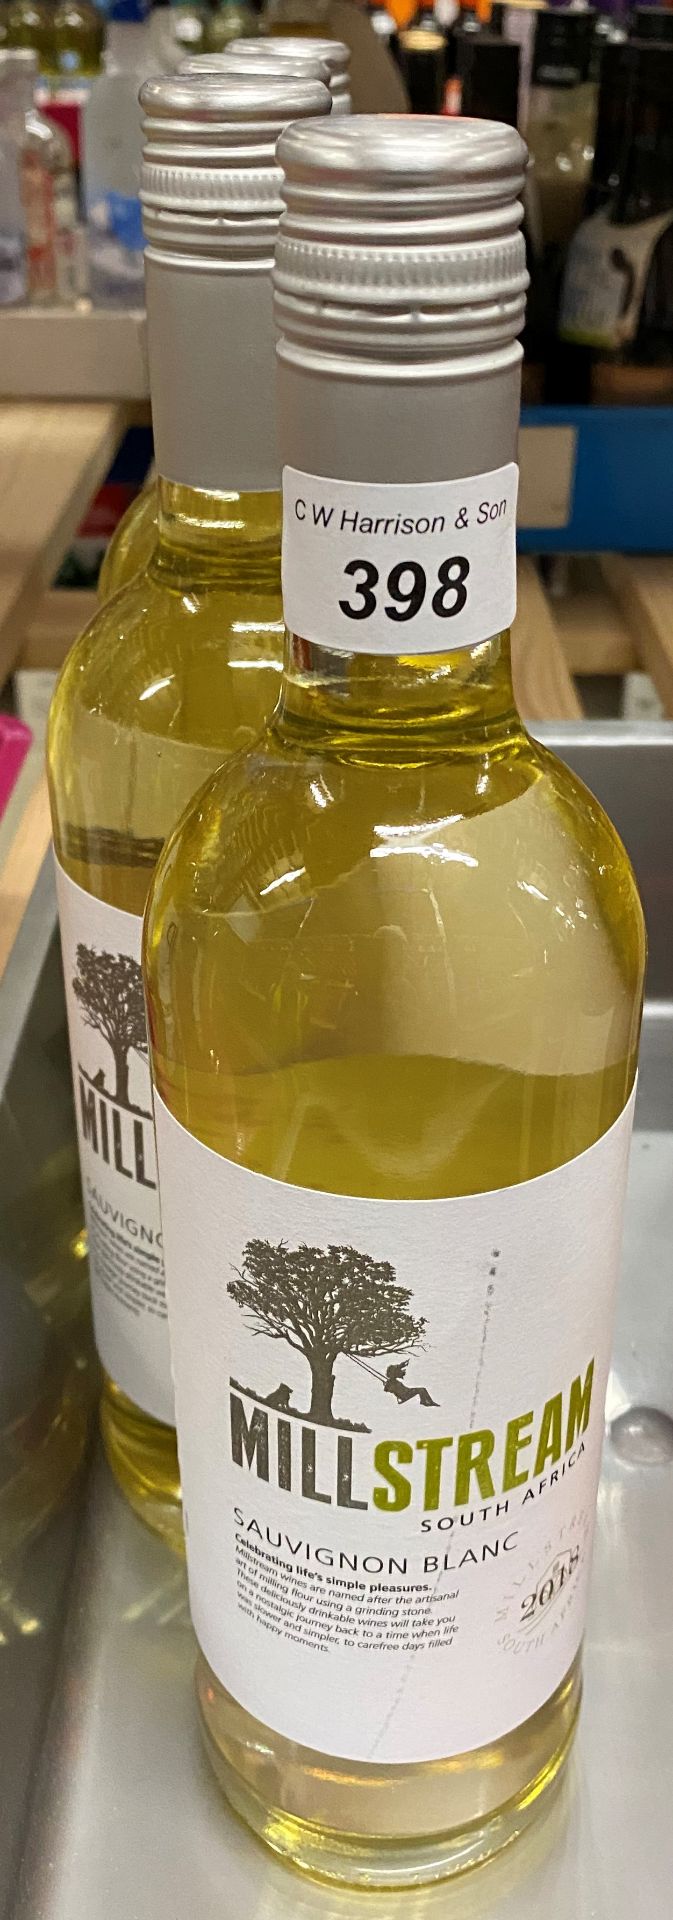 4 x 75cl bottles of Millstream Sauvignon Blanc